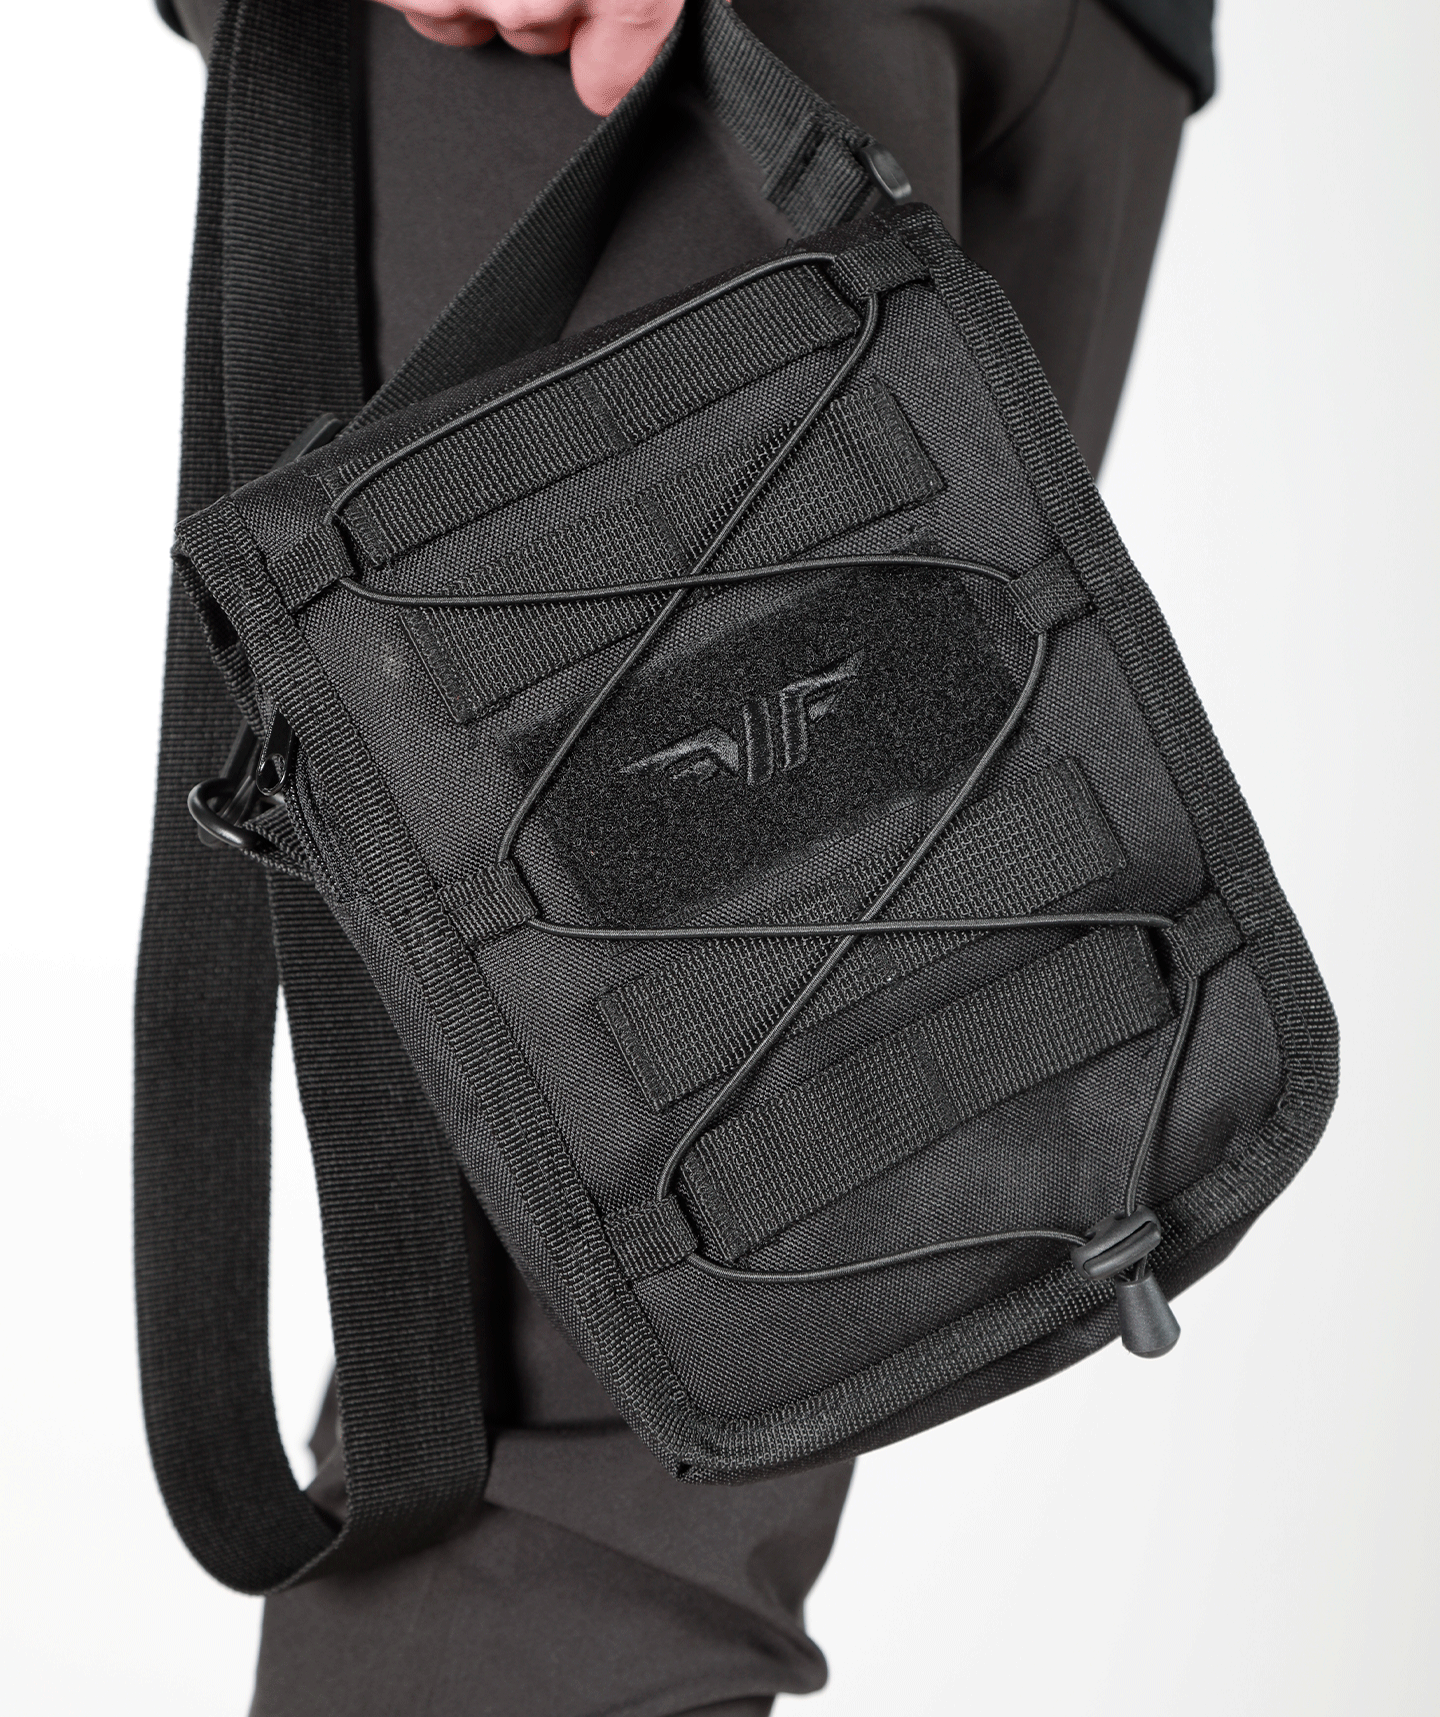 YARD ⚜  
10192-01 ⚜  
A5 ⚜  
PANTONE: No pantone color assigned ⚜  
parachute fabric, 100 % polyamide, black